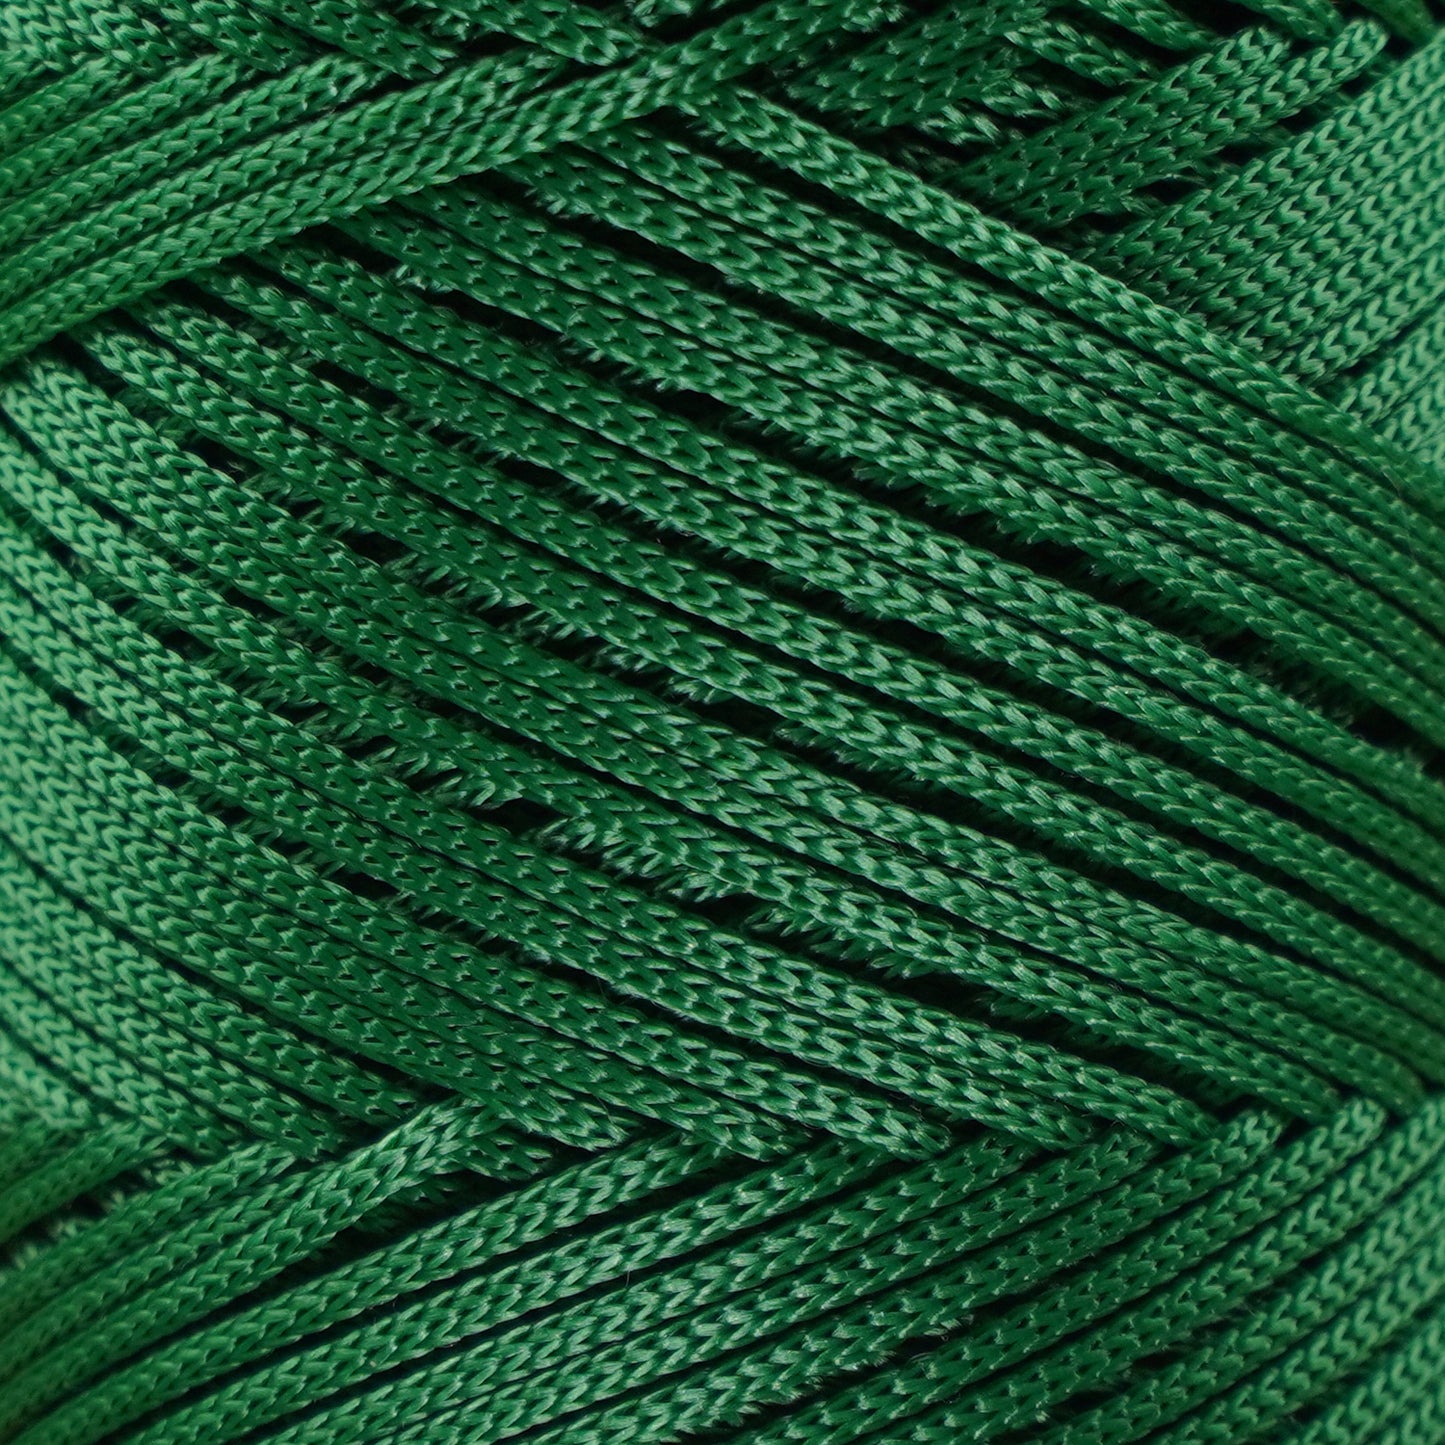 Makramee Garn 2mm x 115m Premium Polyester Macrame Cord - Benetton Grün